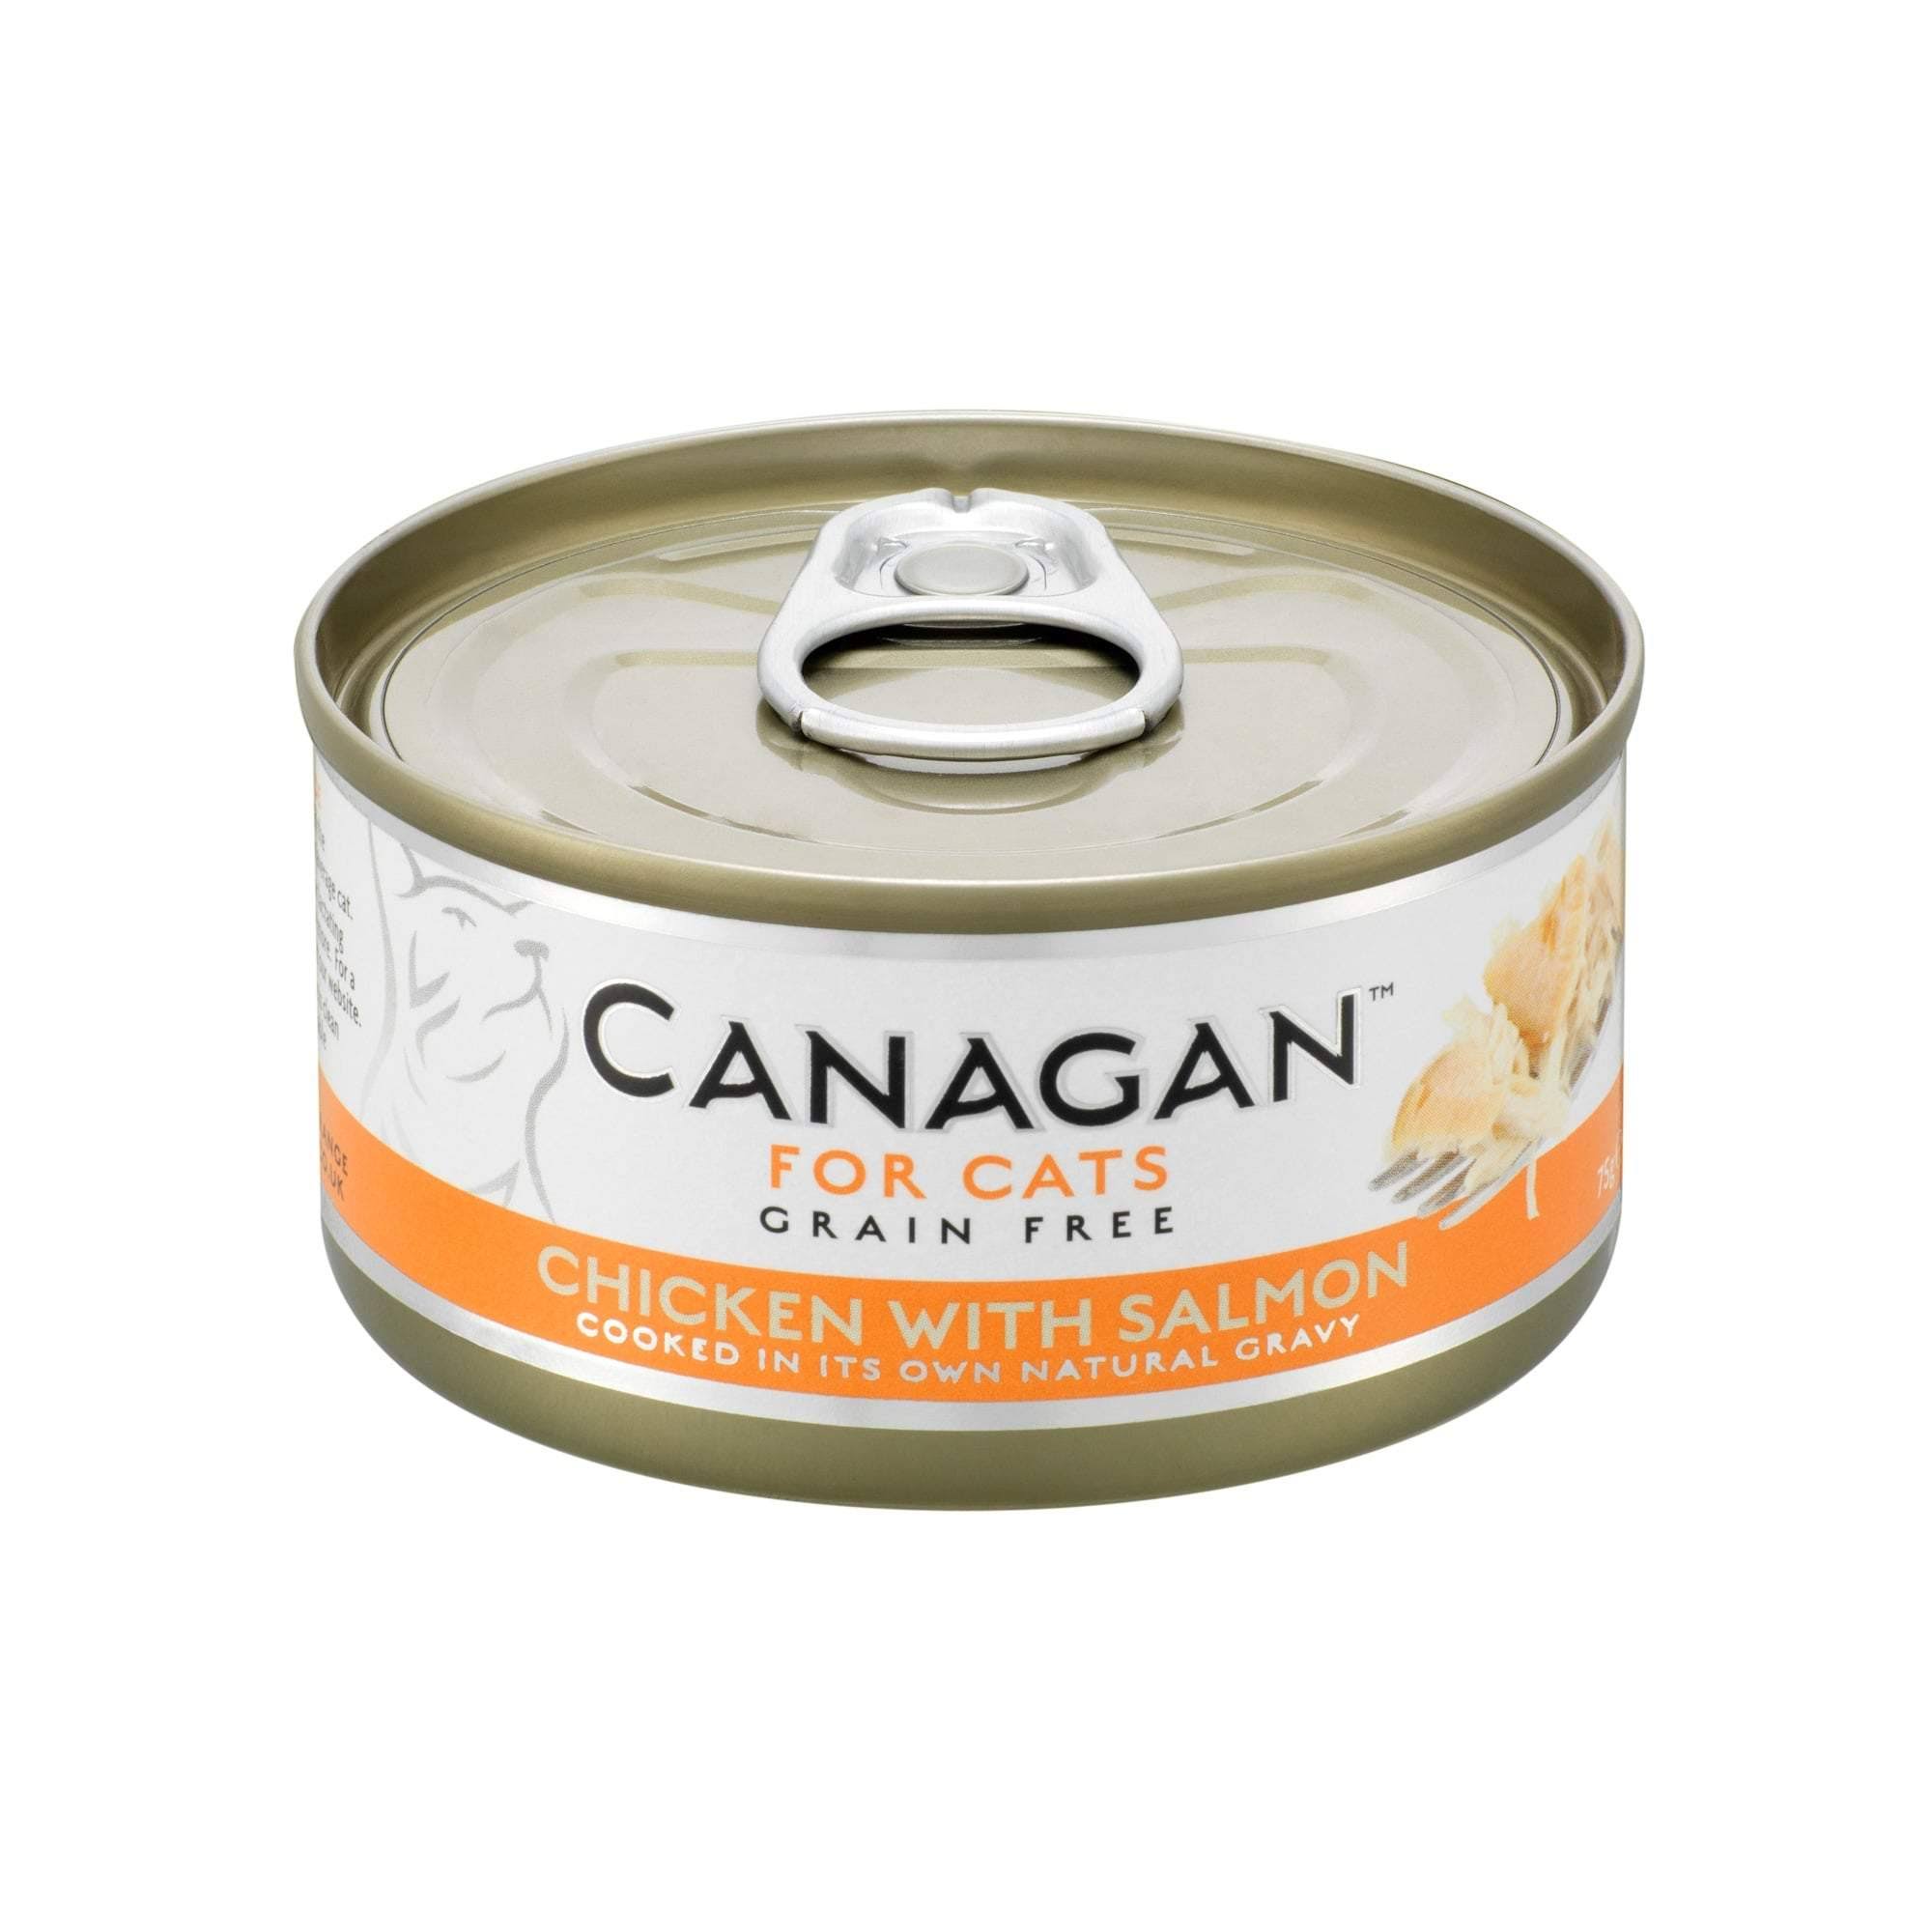 Canagan Grain Free Tinned Cat Food - Chicken & Salmon, 75g